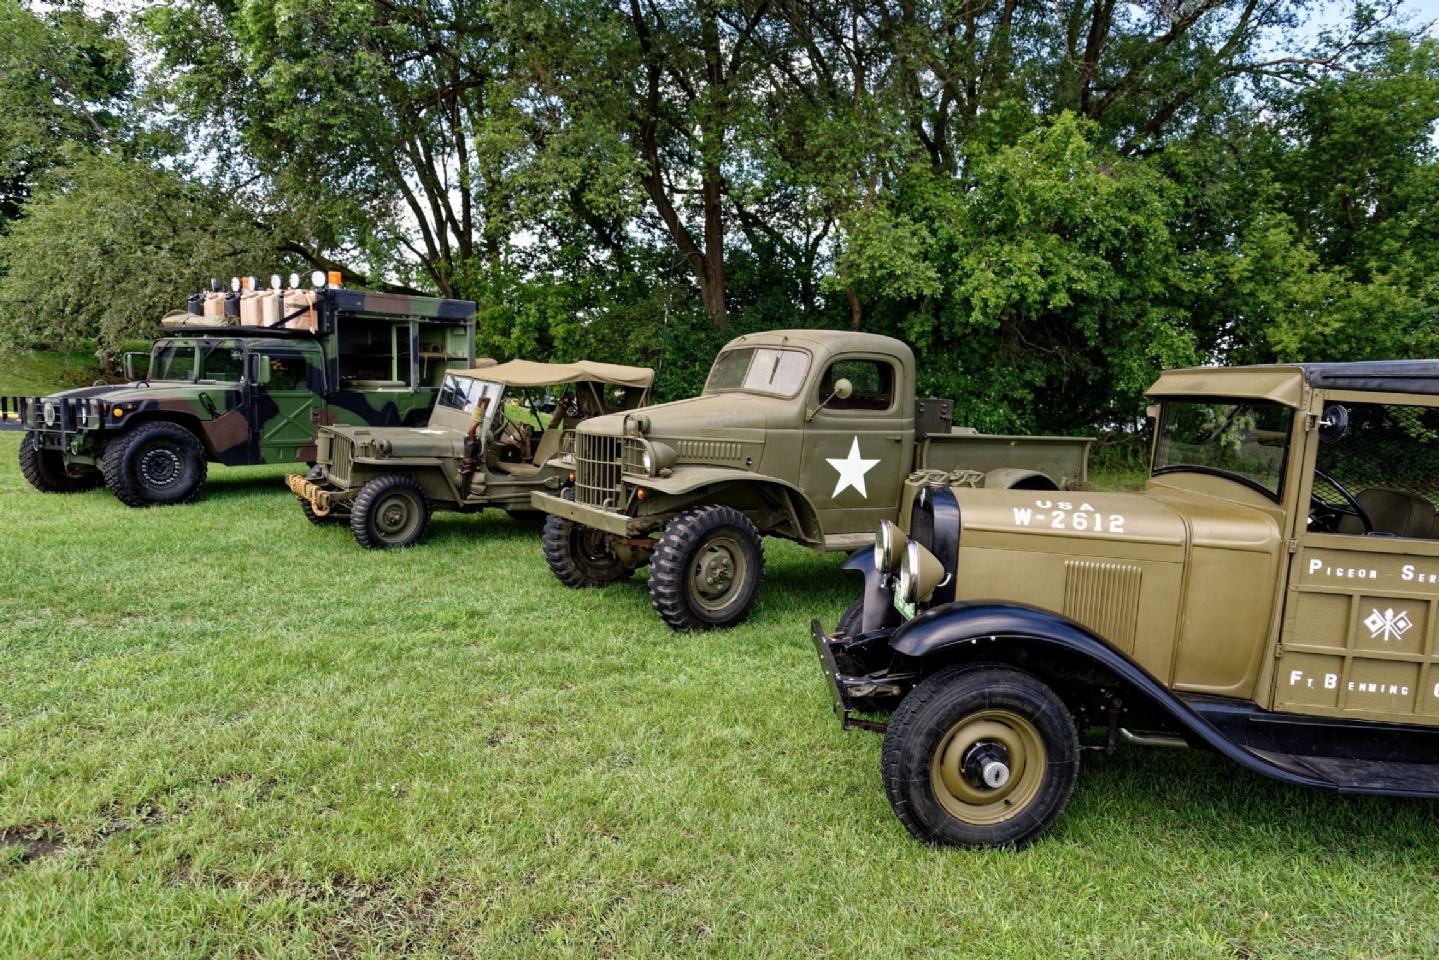 Military Vehicles, old & new(er)